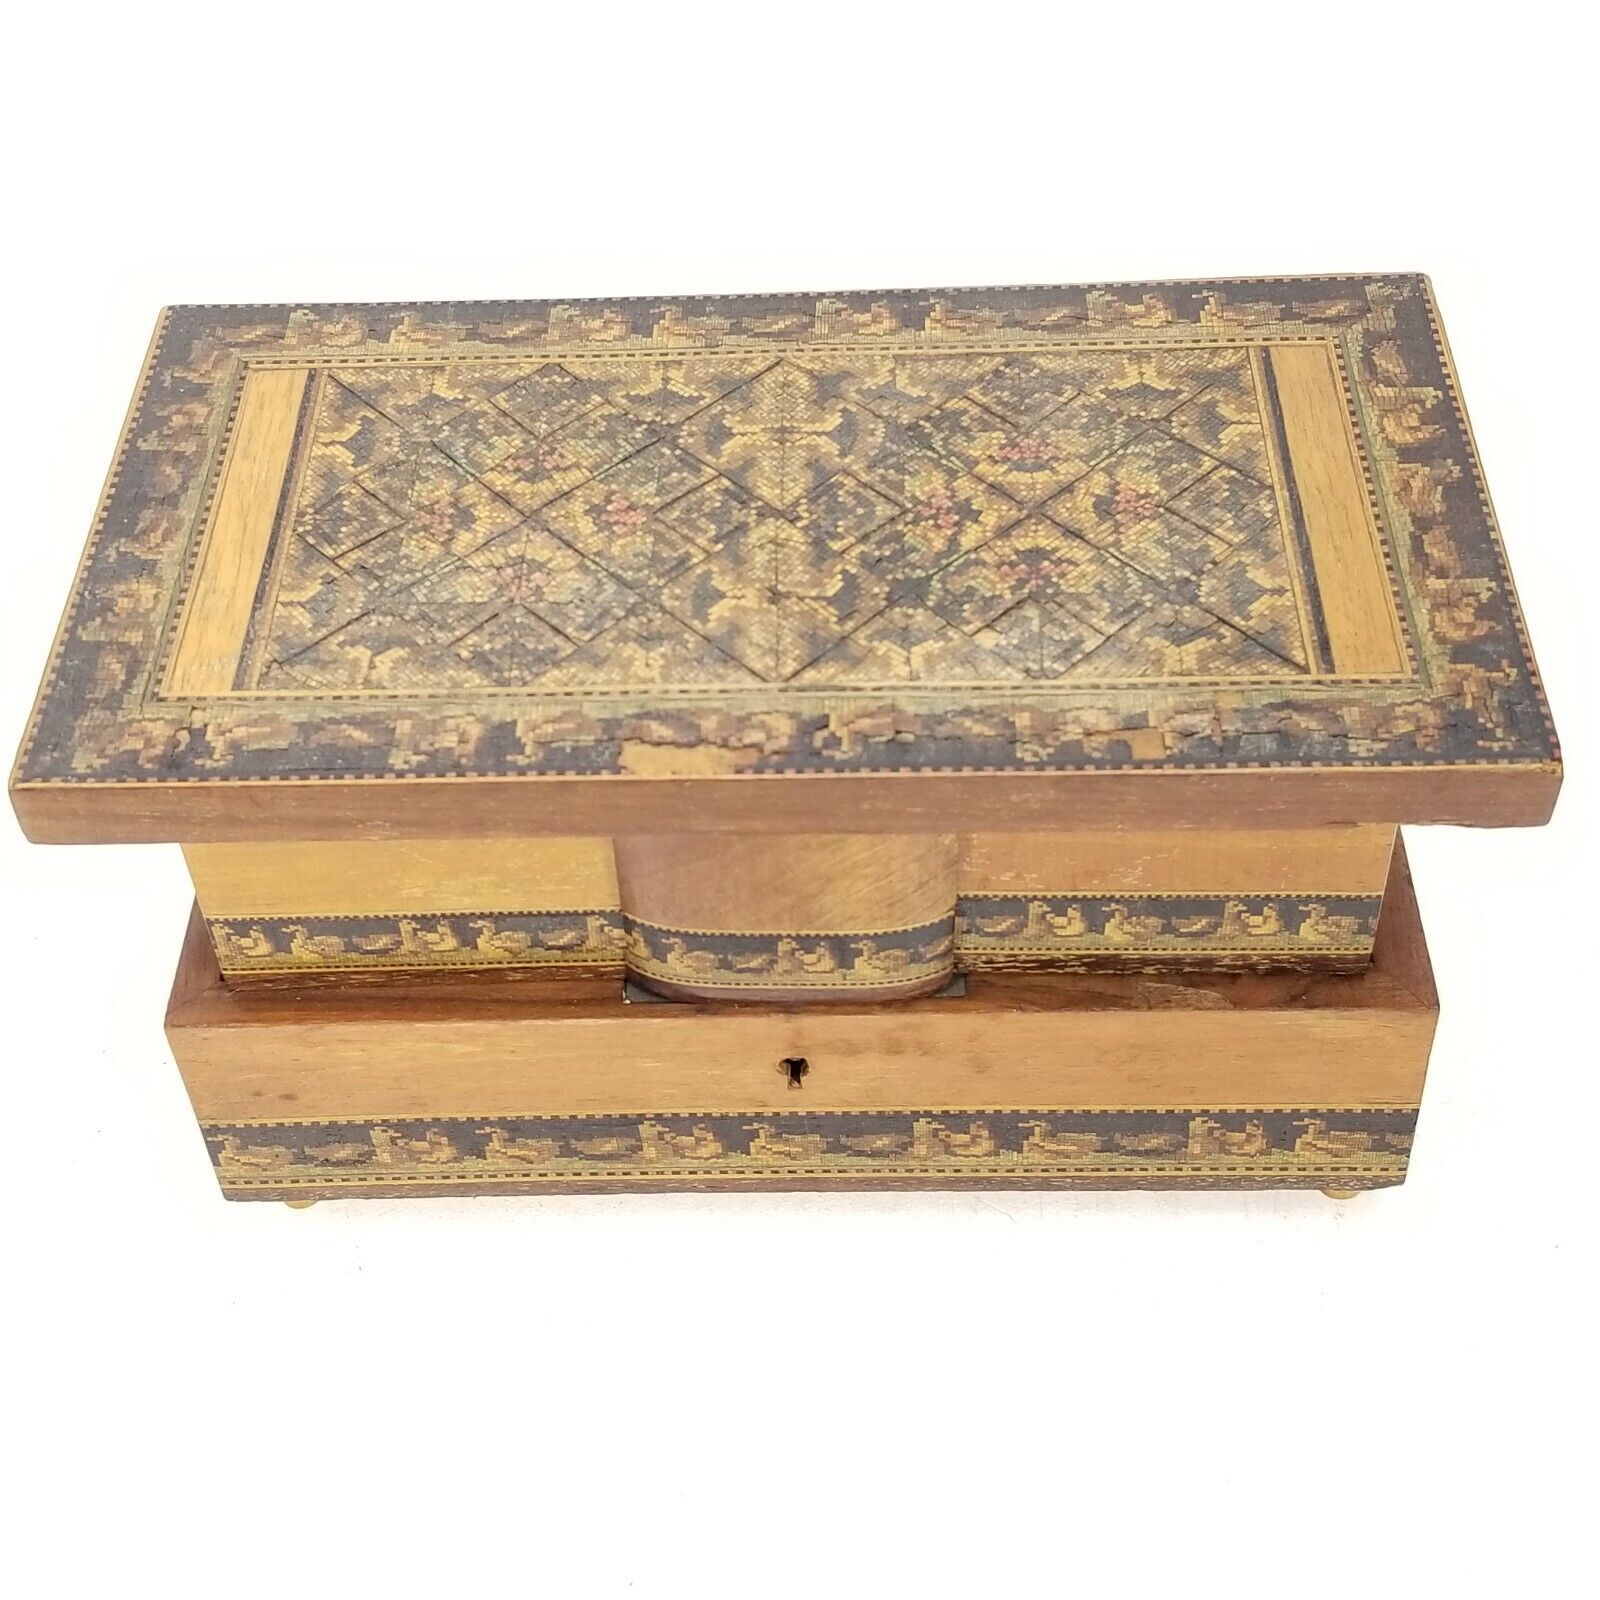 Antique Tunbridge Inlaid Wood Jewelry Dresser Box Fold Out Compartments Orig Key